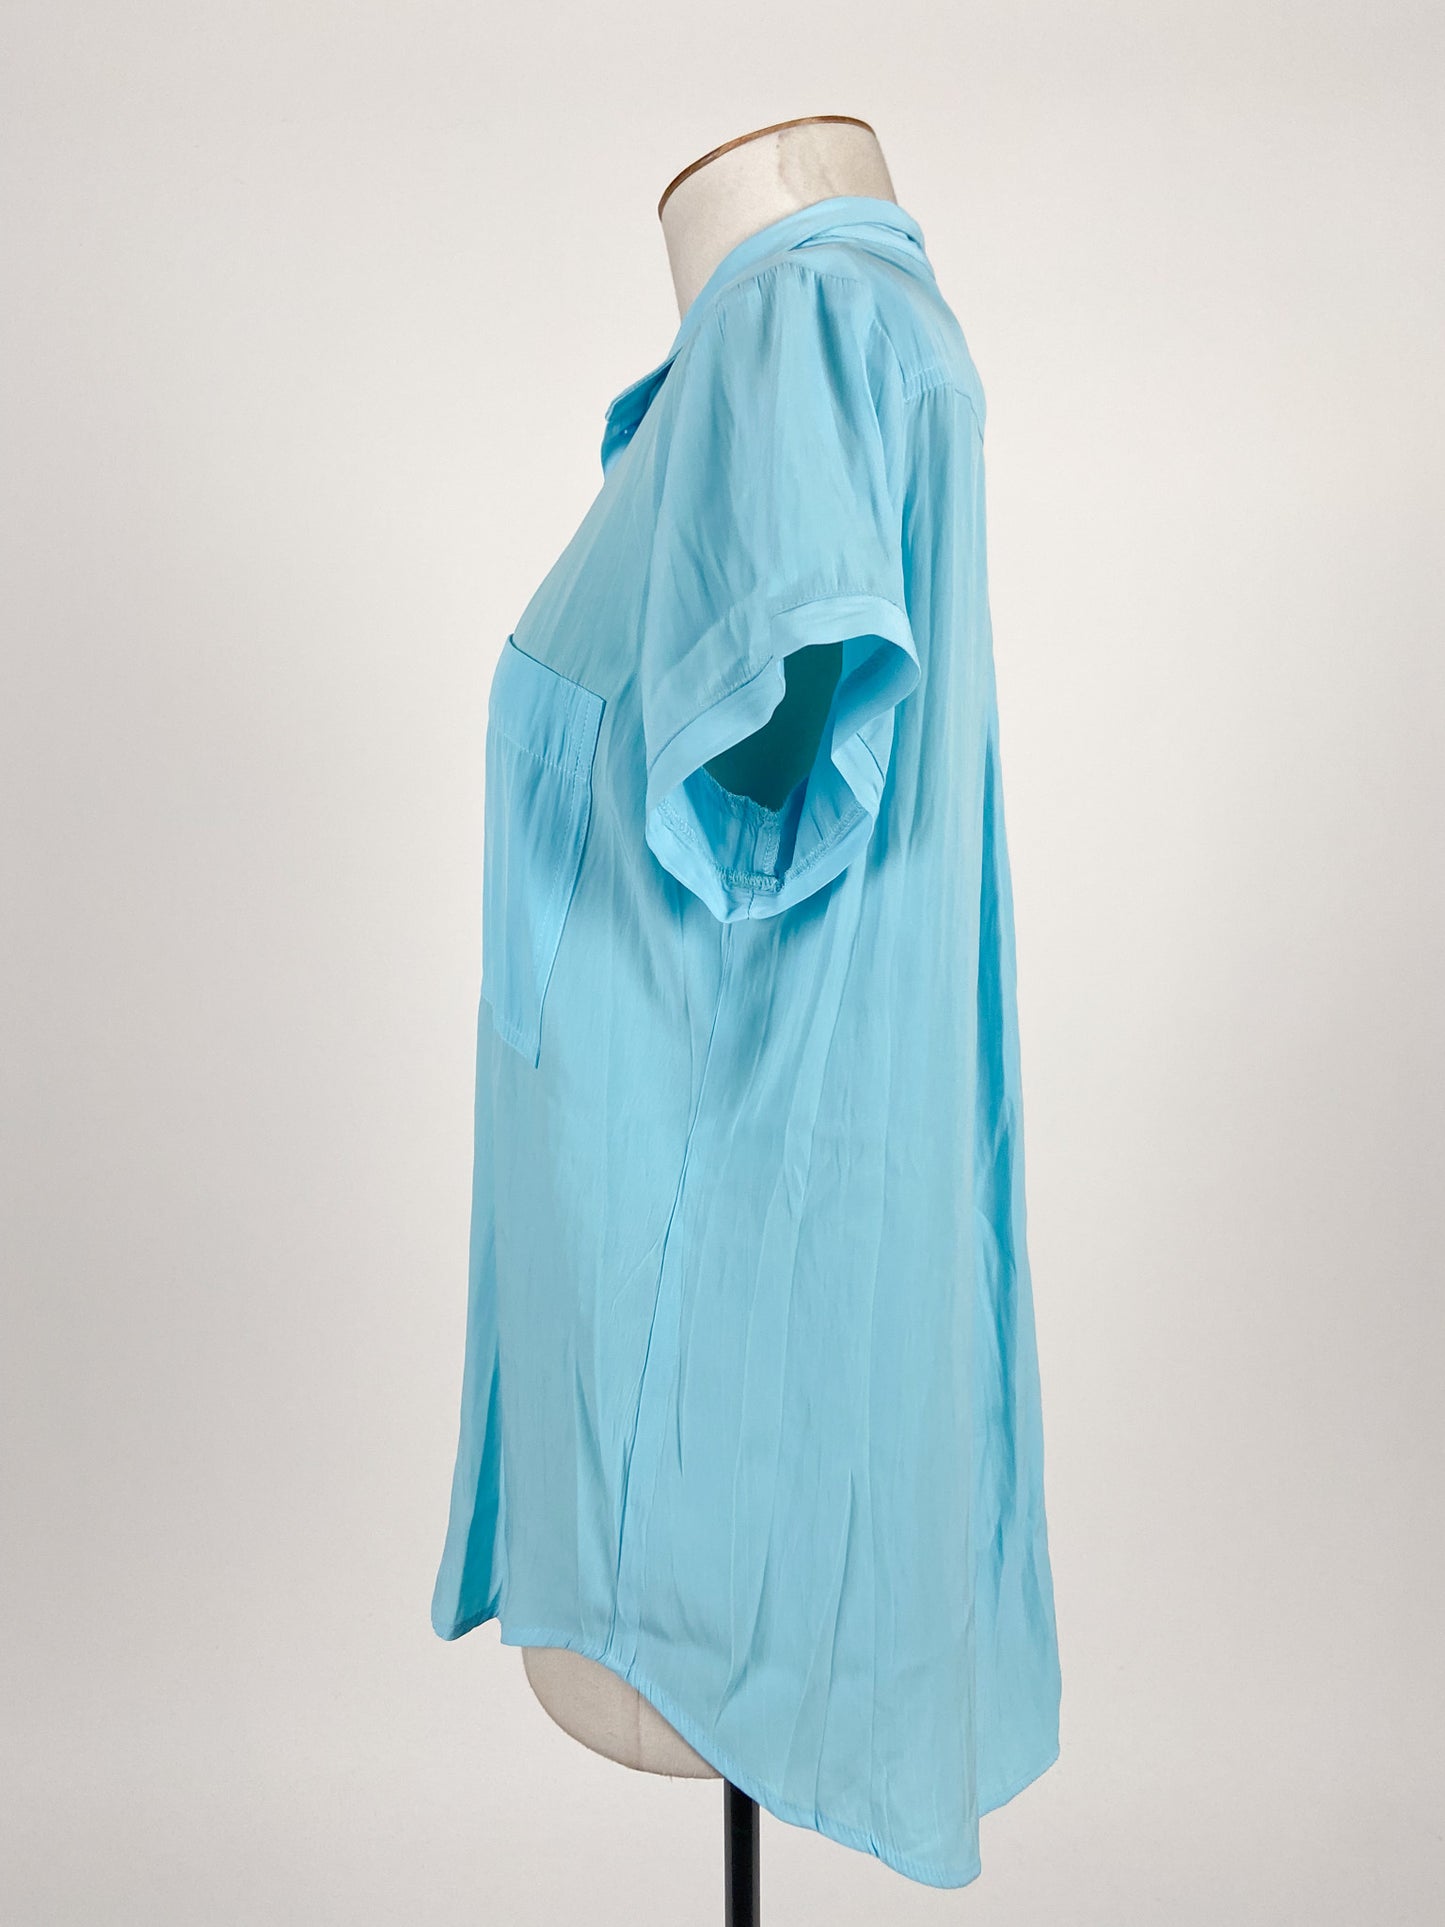 Mela Purdie | Blue Workwear Top | Size XS